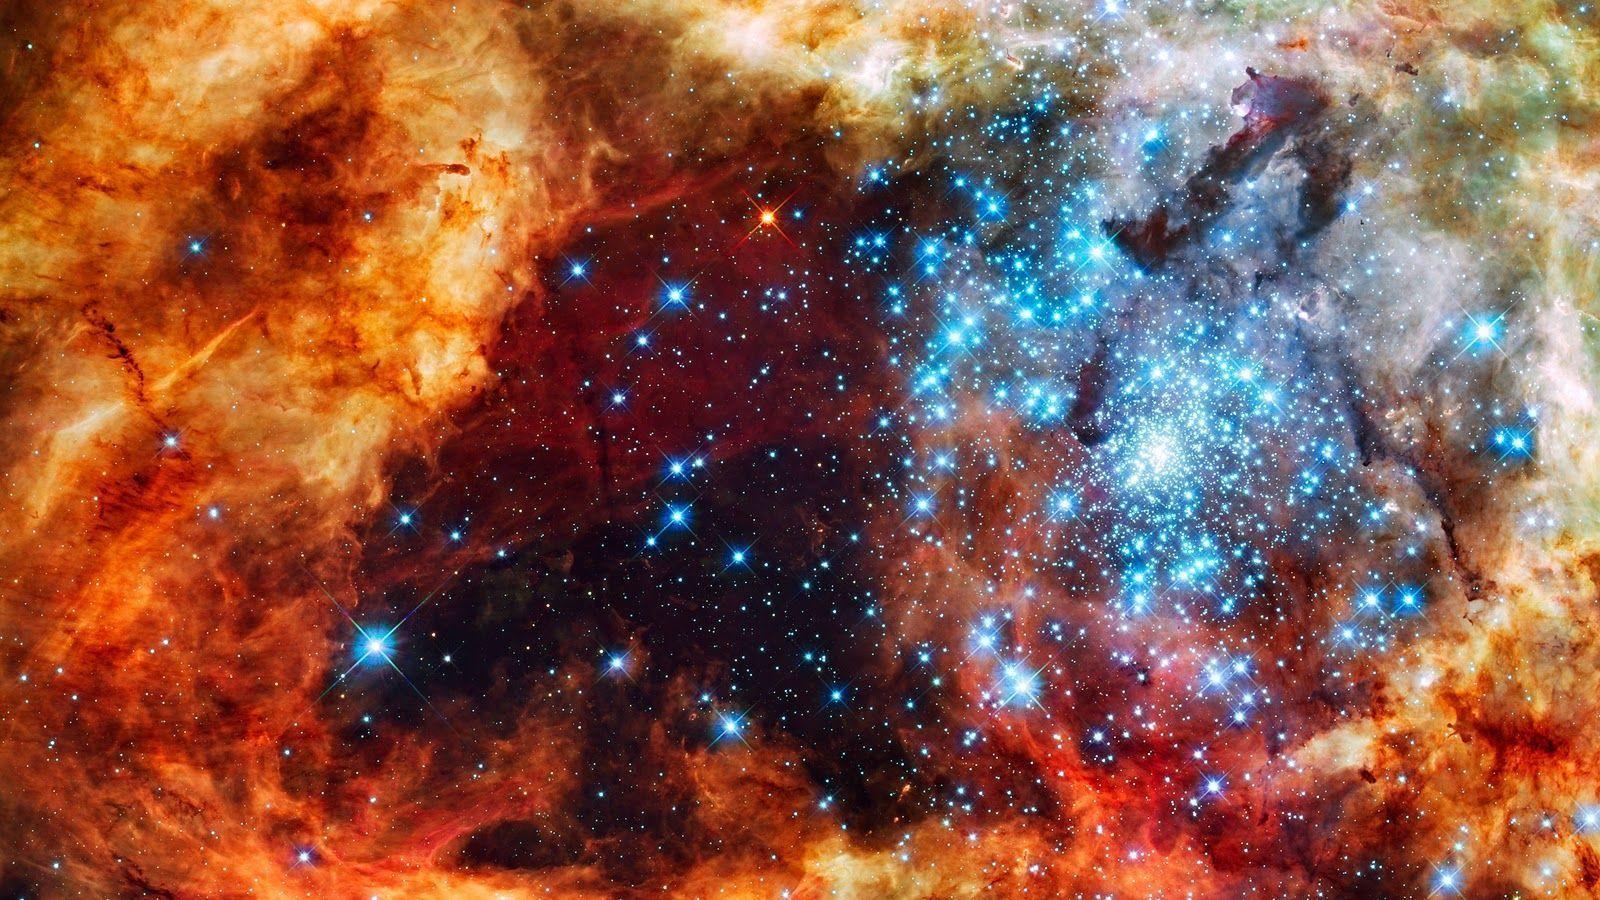 Hubble Space Telescope Image Wallpaper